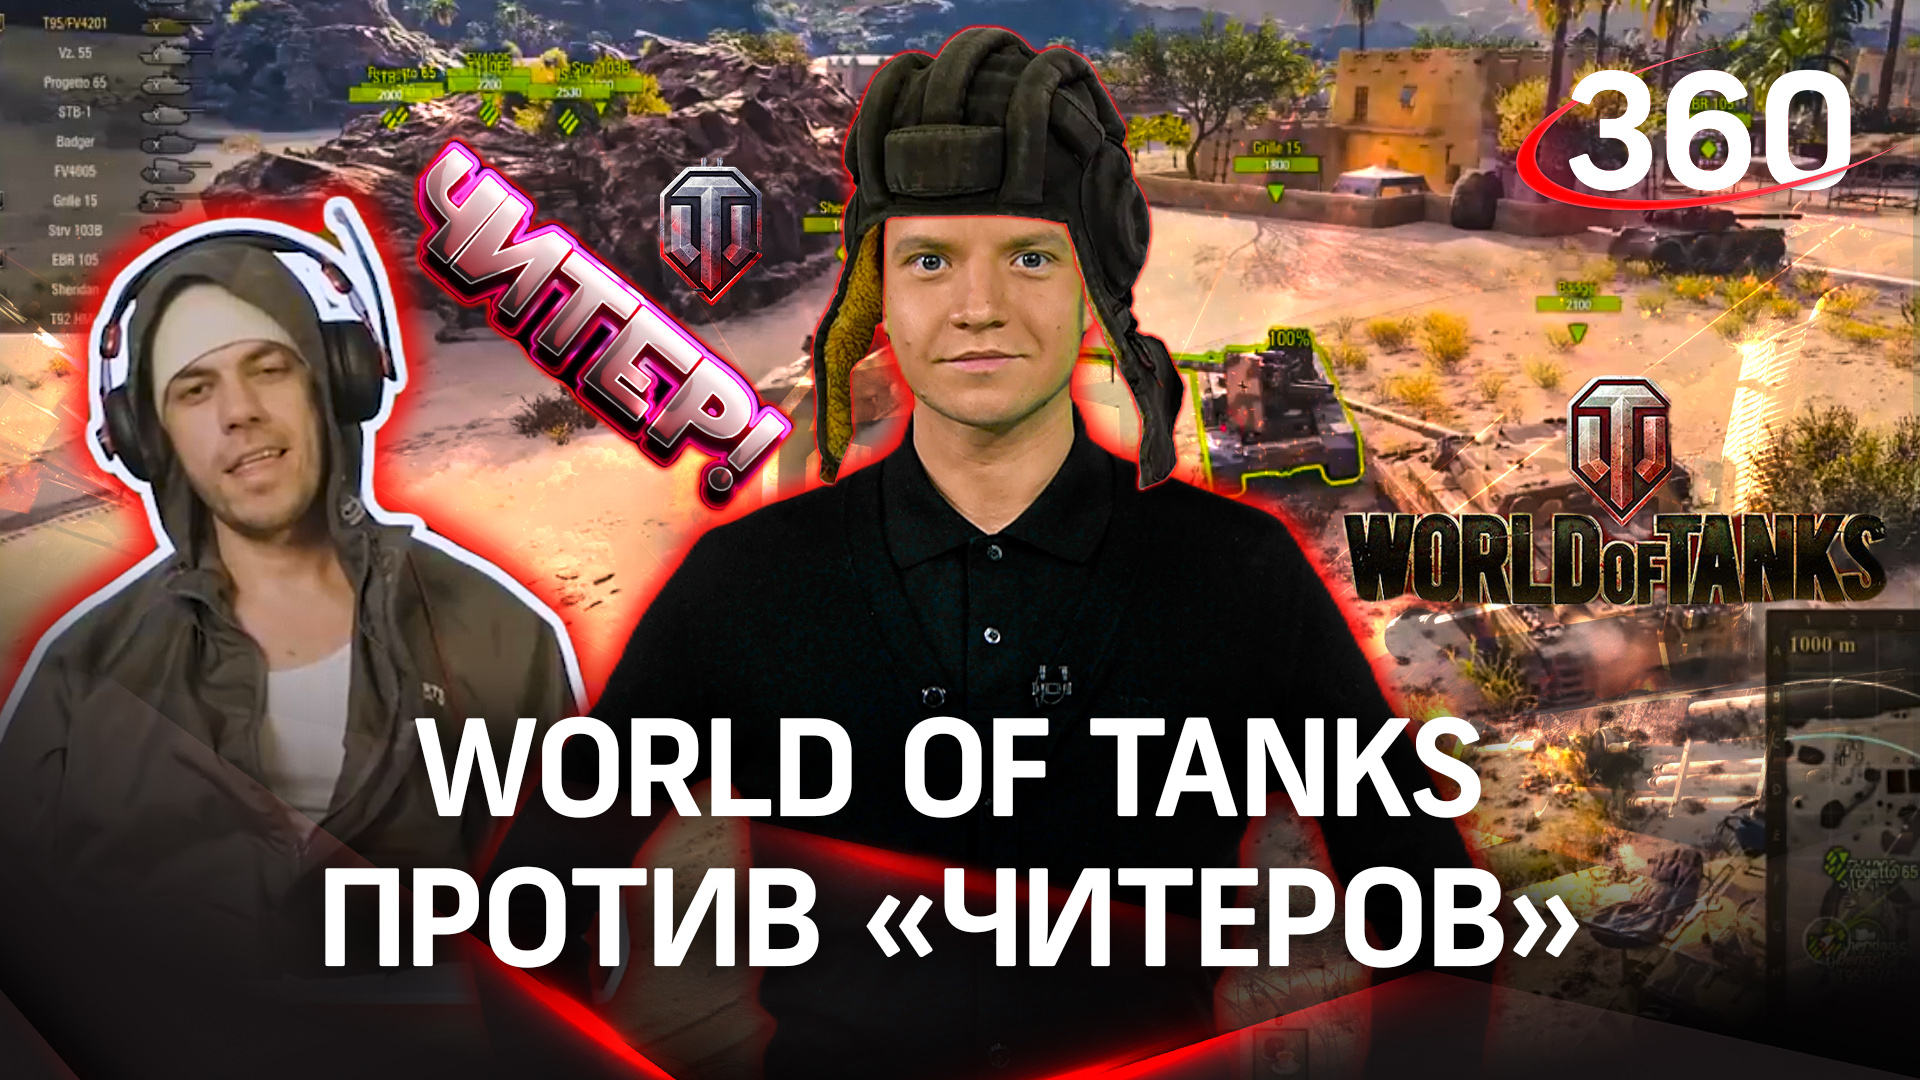 Уральца судят за «мошенничество» в World of Tanks